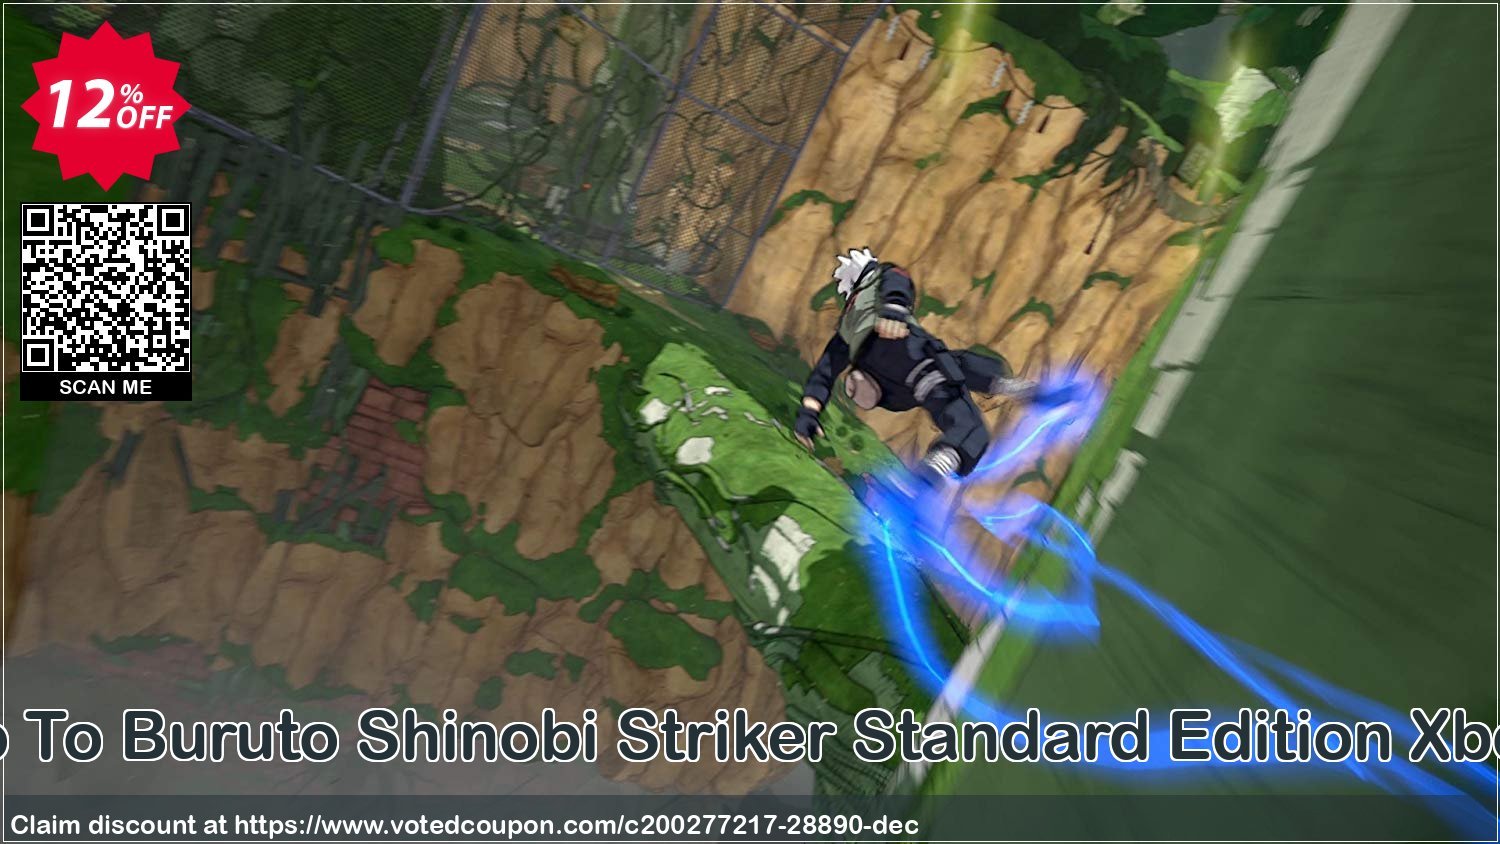 Naruto To Buruto Shinobi Striker Standard Edition Xbox One Coupon Code Apr 2024, 12% OFF - VotedCoupon